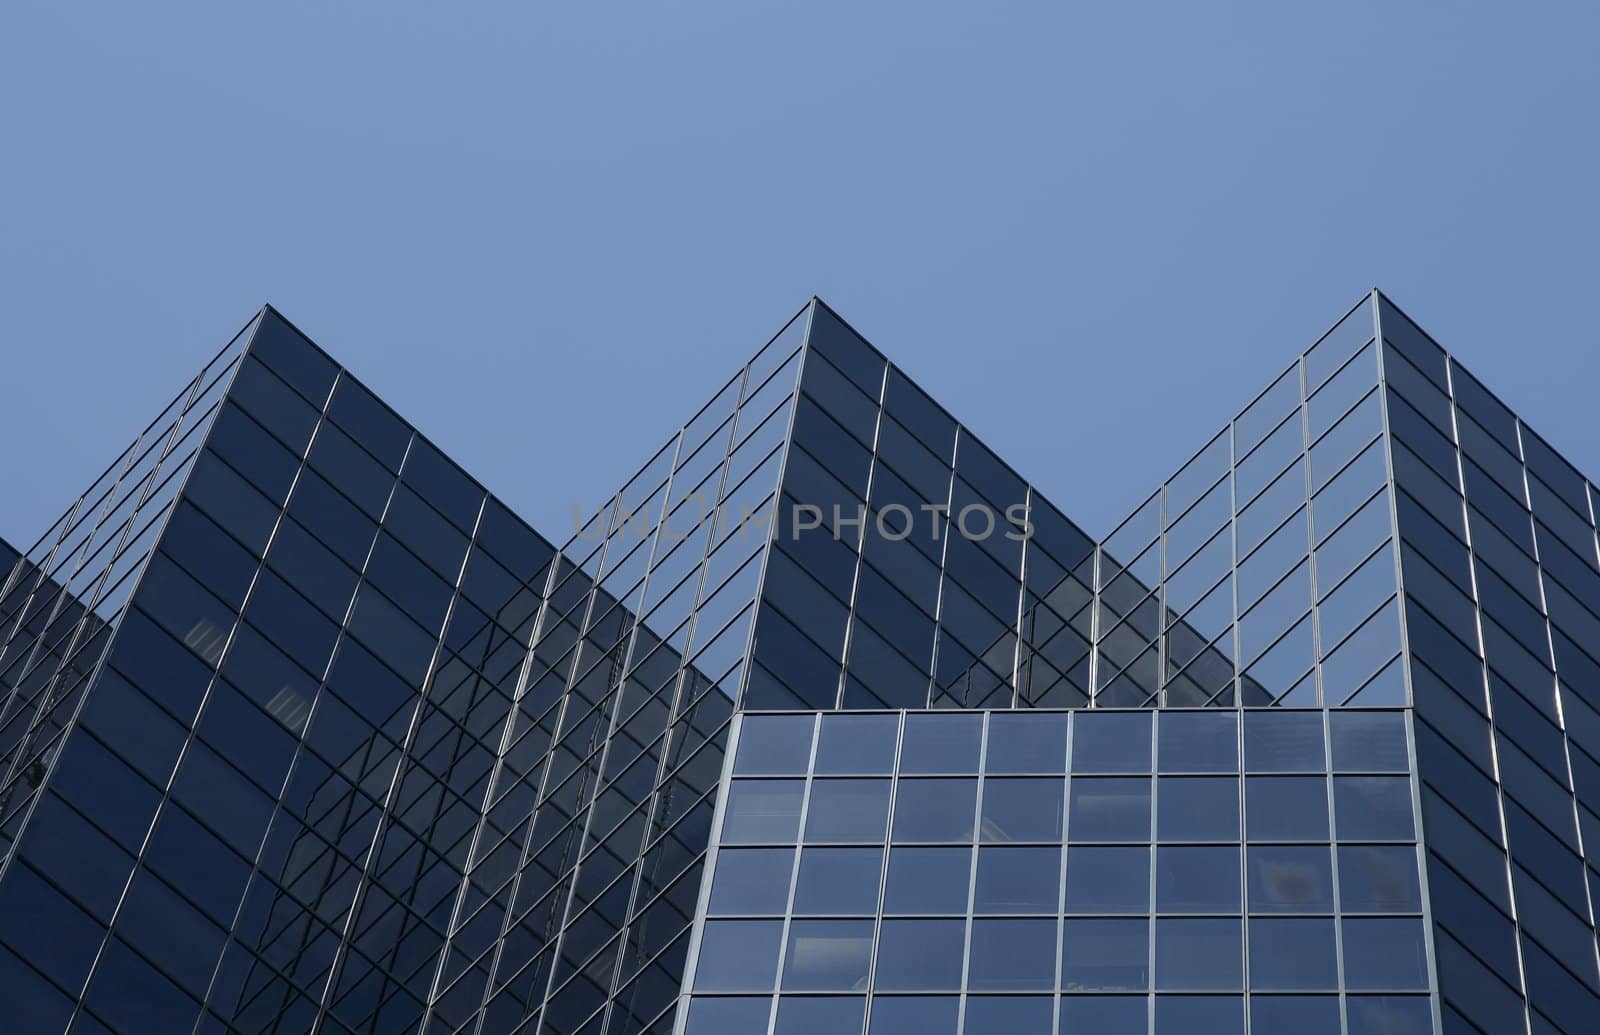 Triangular shape of an office building by anikasalsera